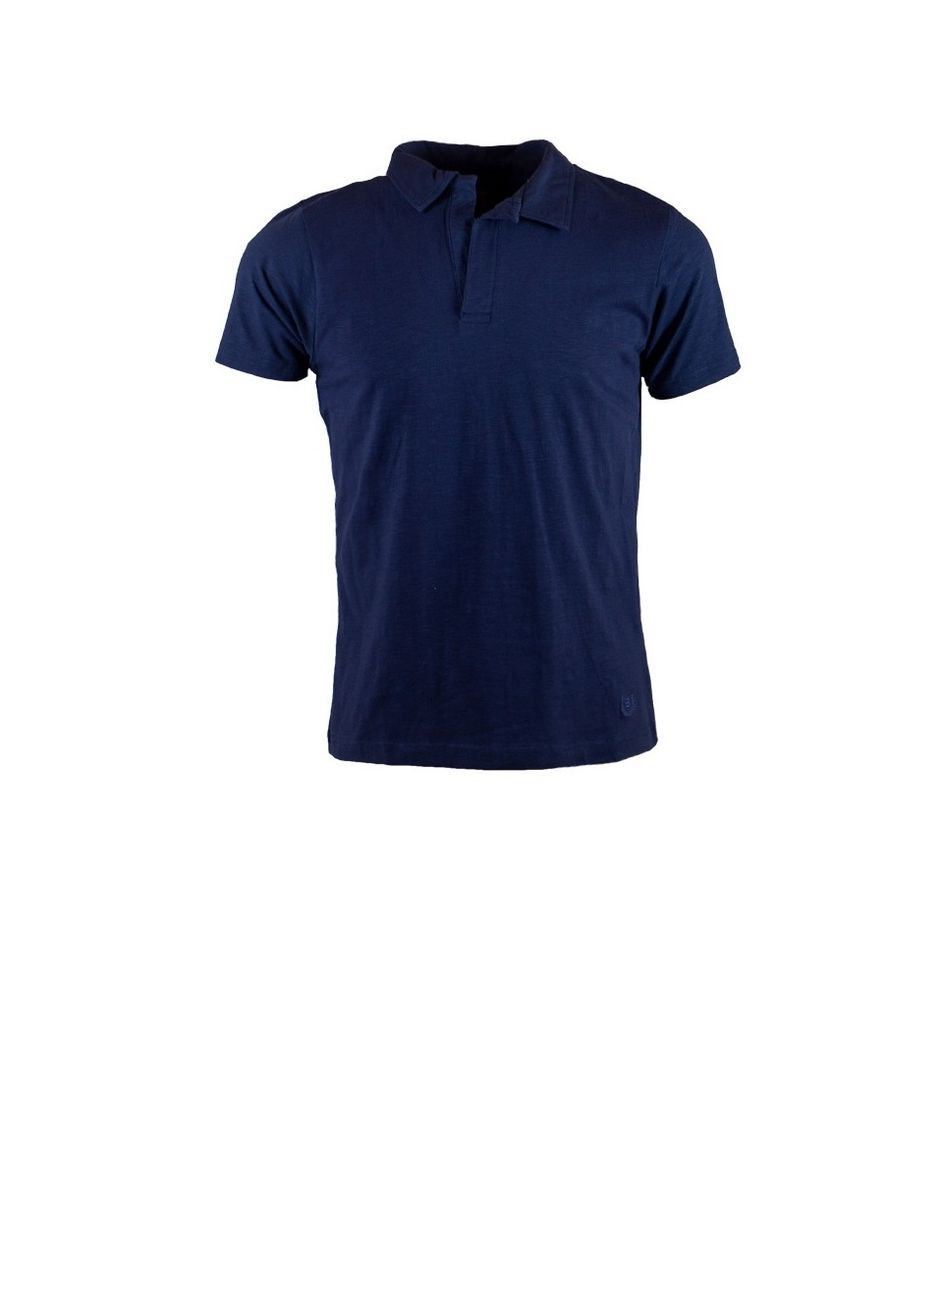 Темно-синяя футболка-футболка поло итальянского бренда для мужчин Sorbino